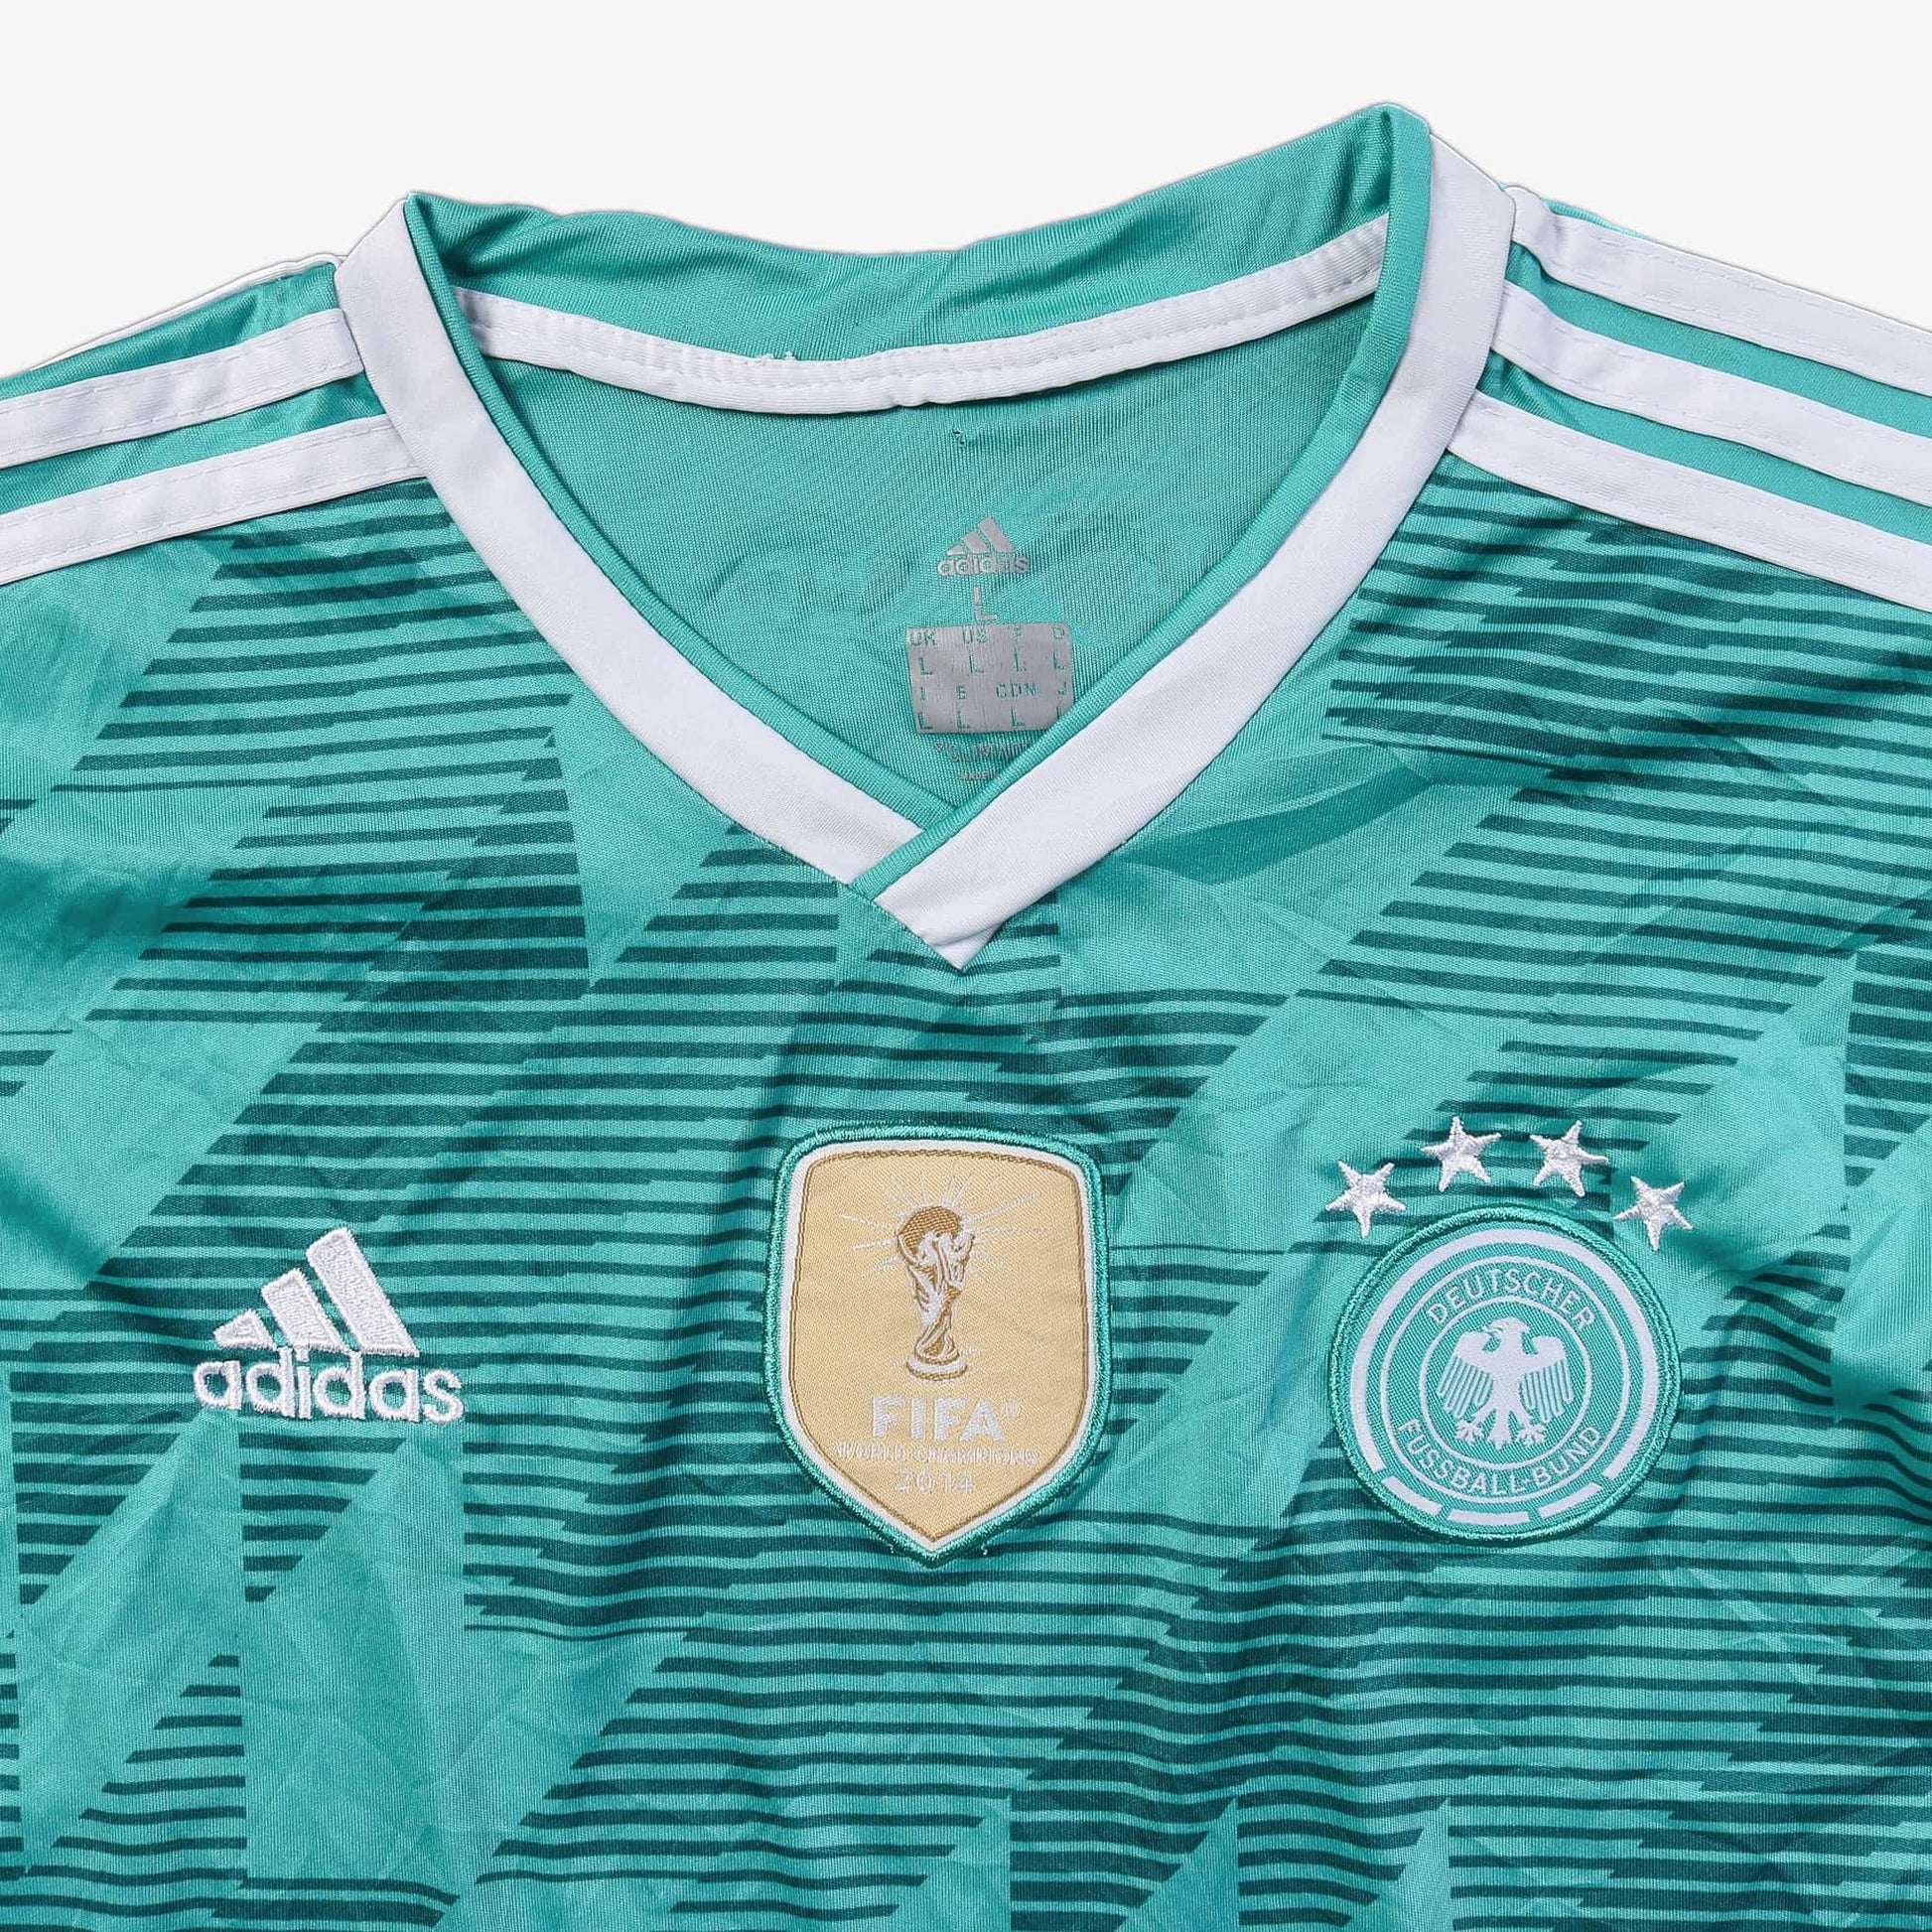 Germany Football Shirt